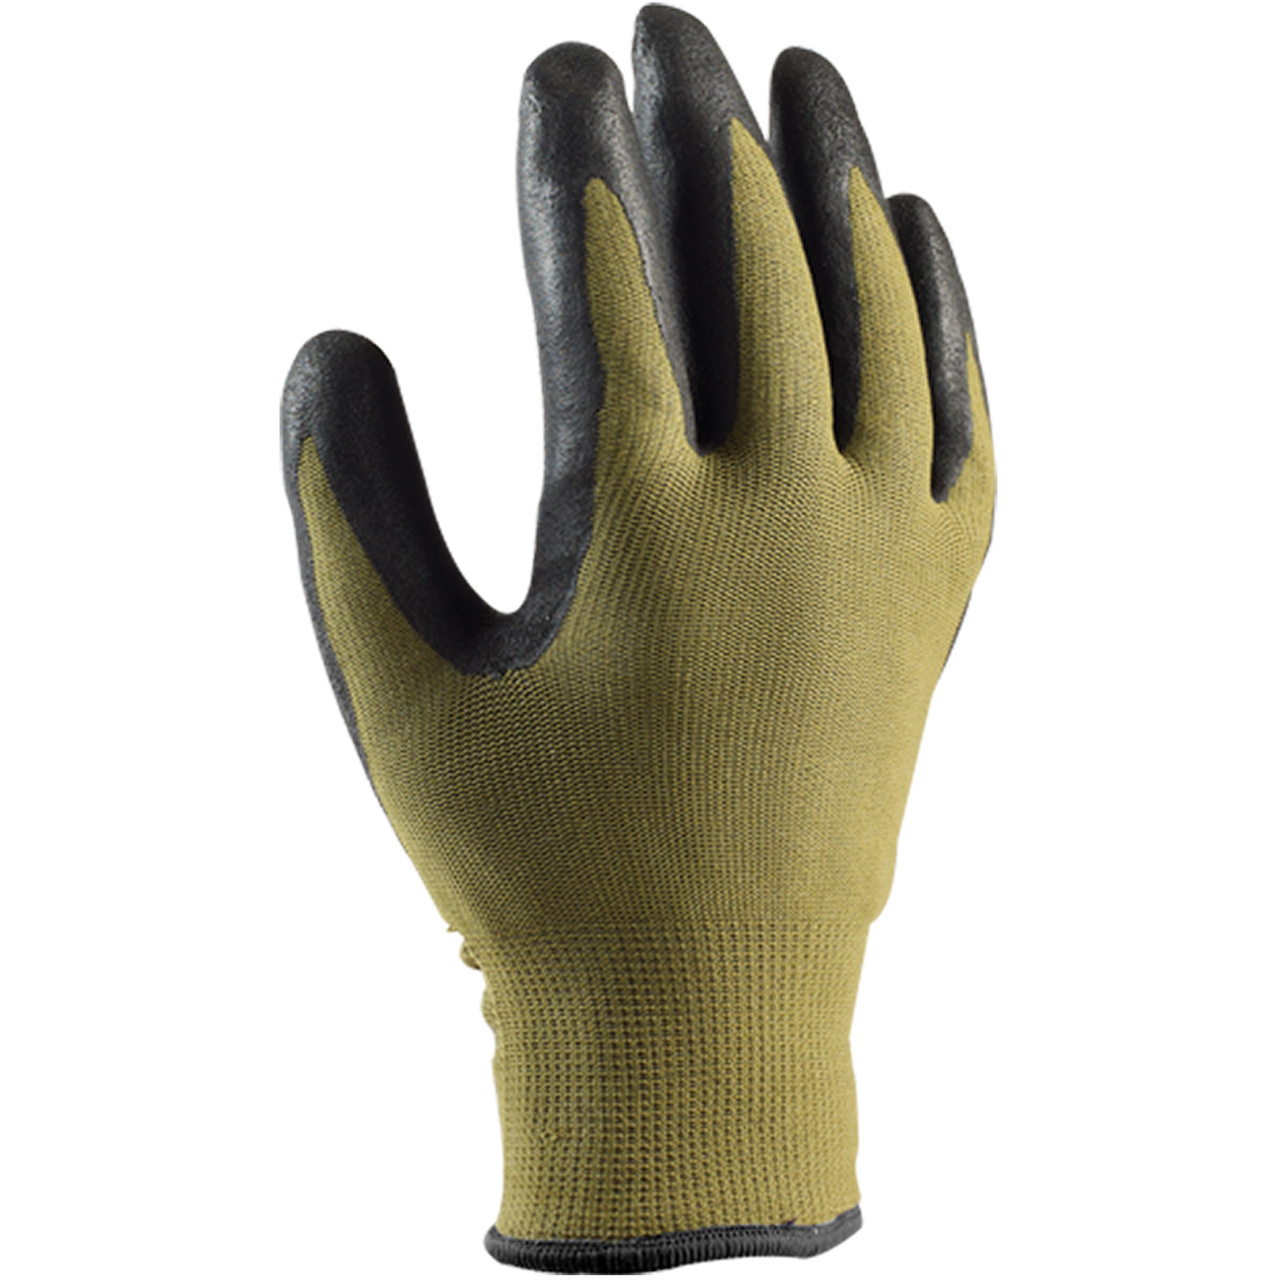 Handske Frost, storlek 11 grön/svart